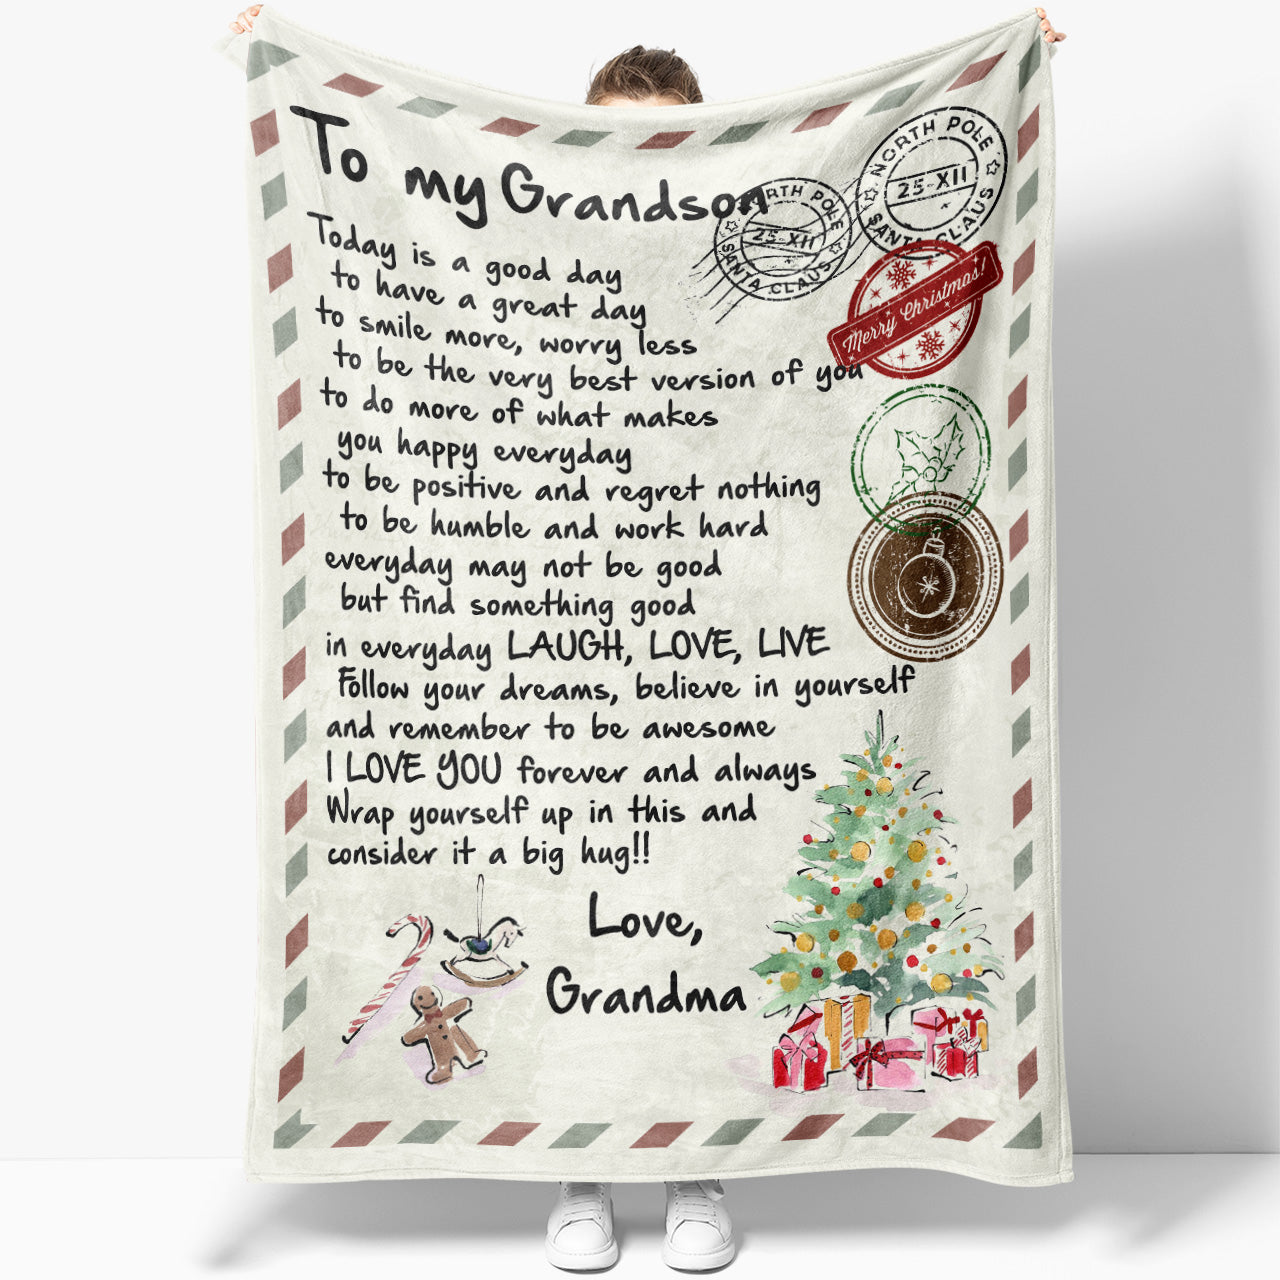 Blanket Christmas Gift For Grandson, Grandson Gifts From Grandma, A Good Day